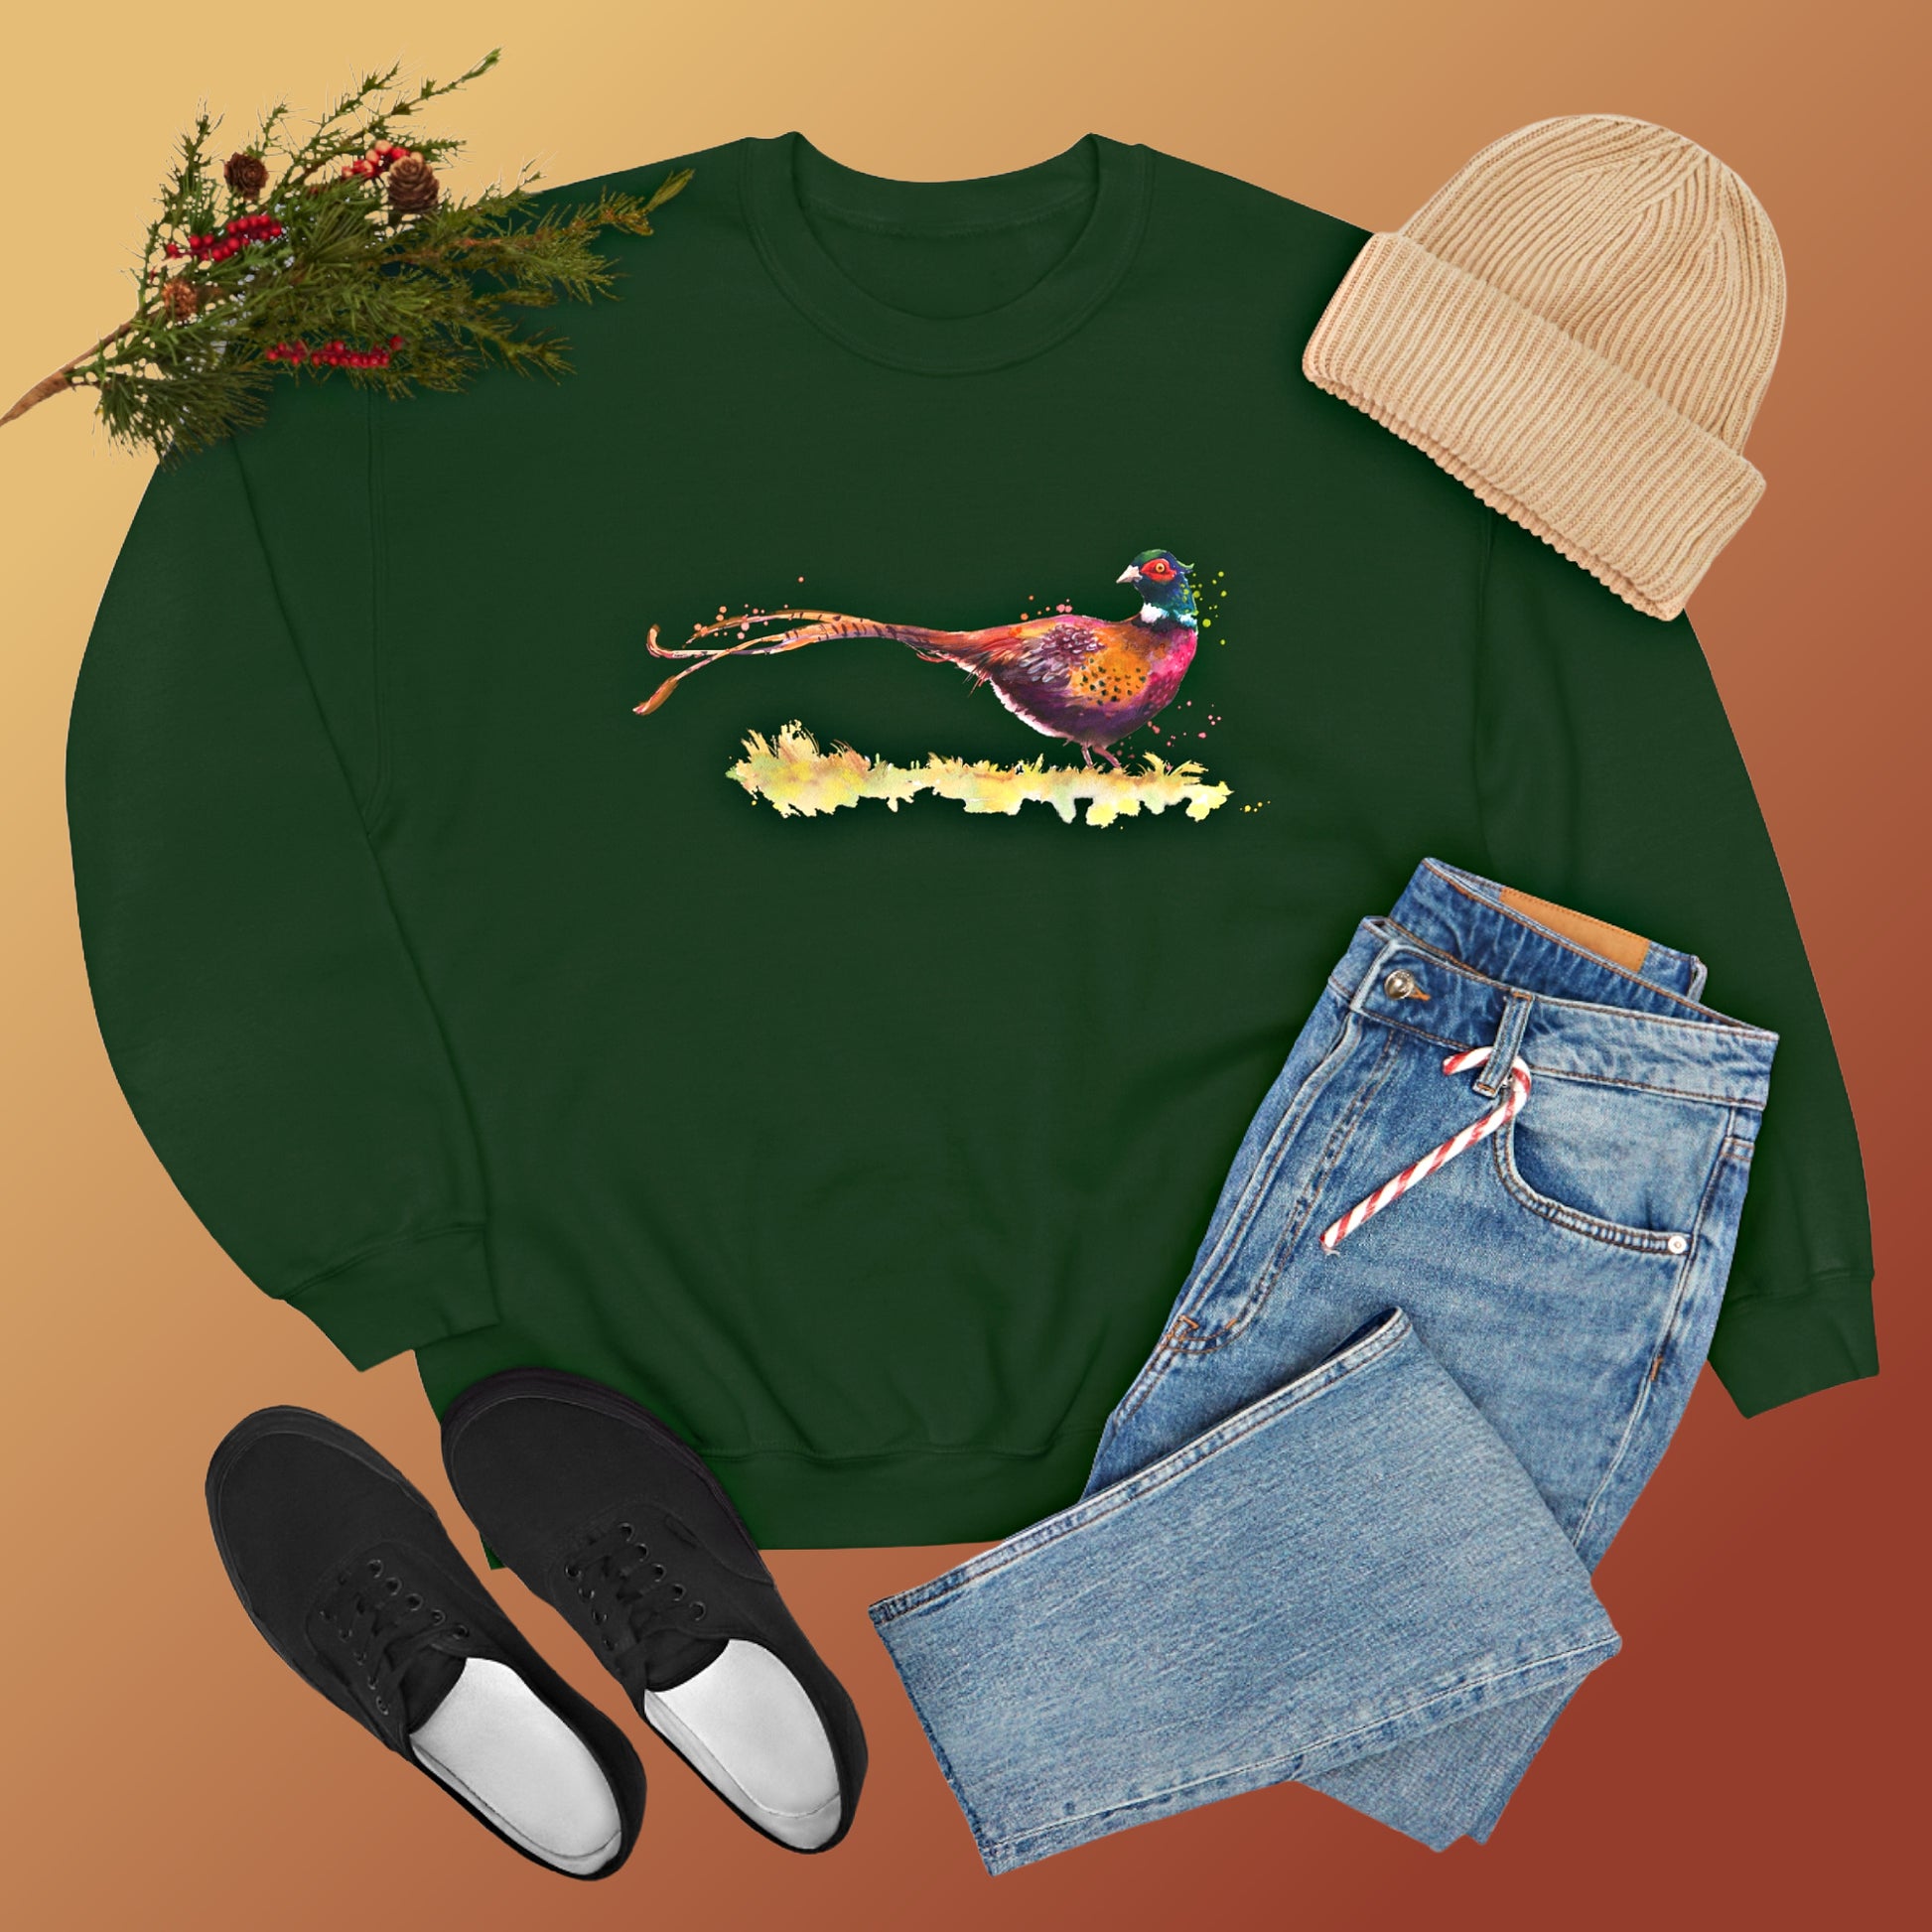 An arrangement of apparel featuring the Forest Green sweatshirr